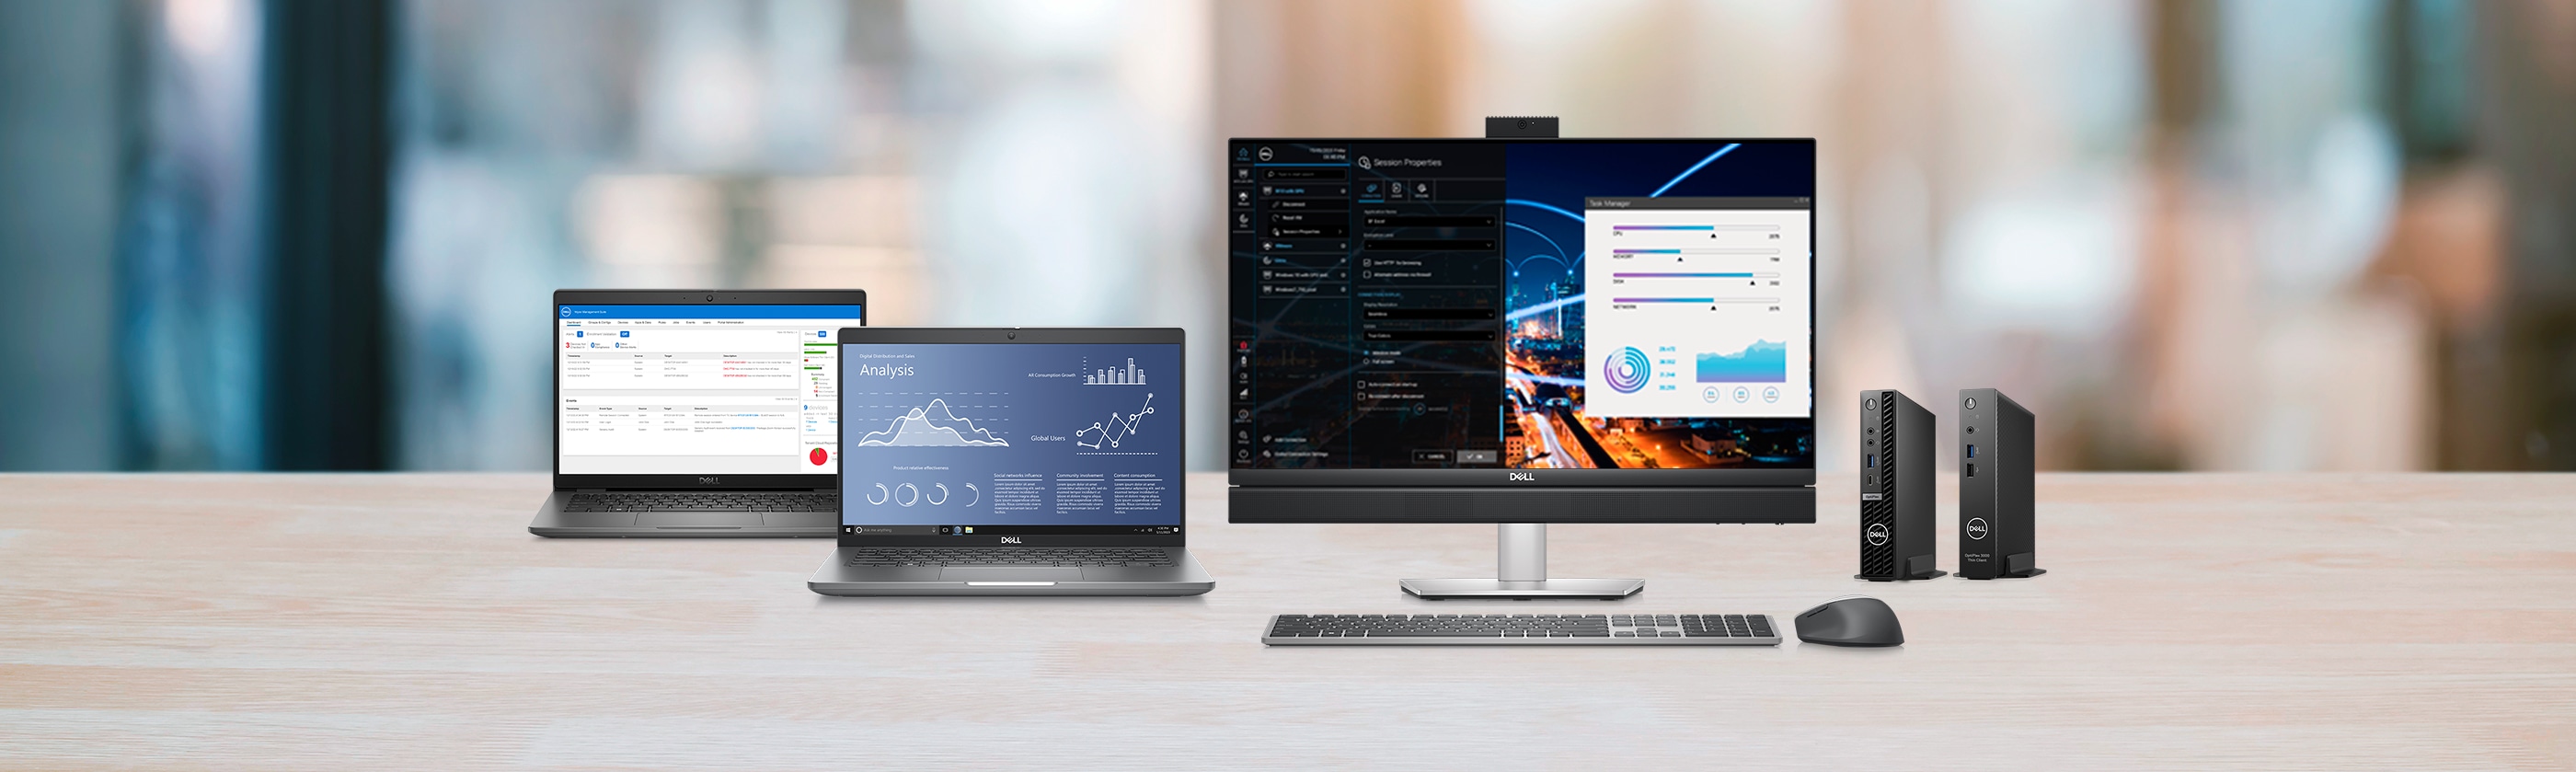 Windows 10 IoT Enterprise: a flexible, Dell optimized software option